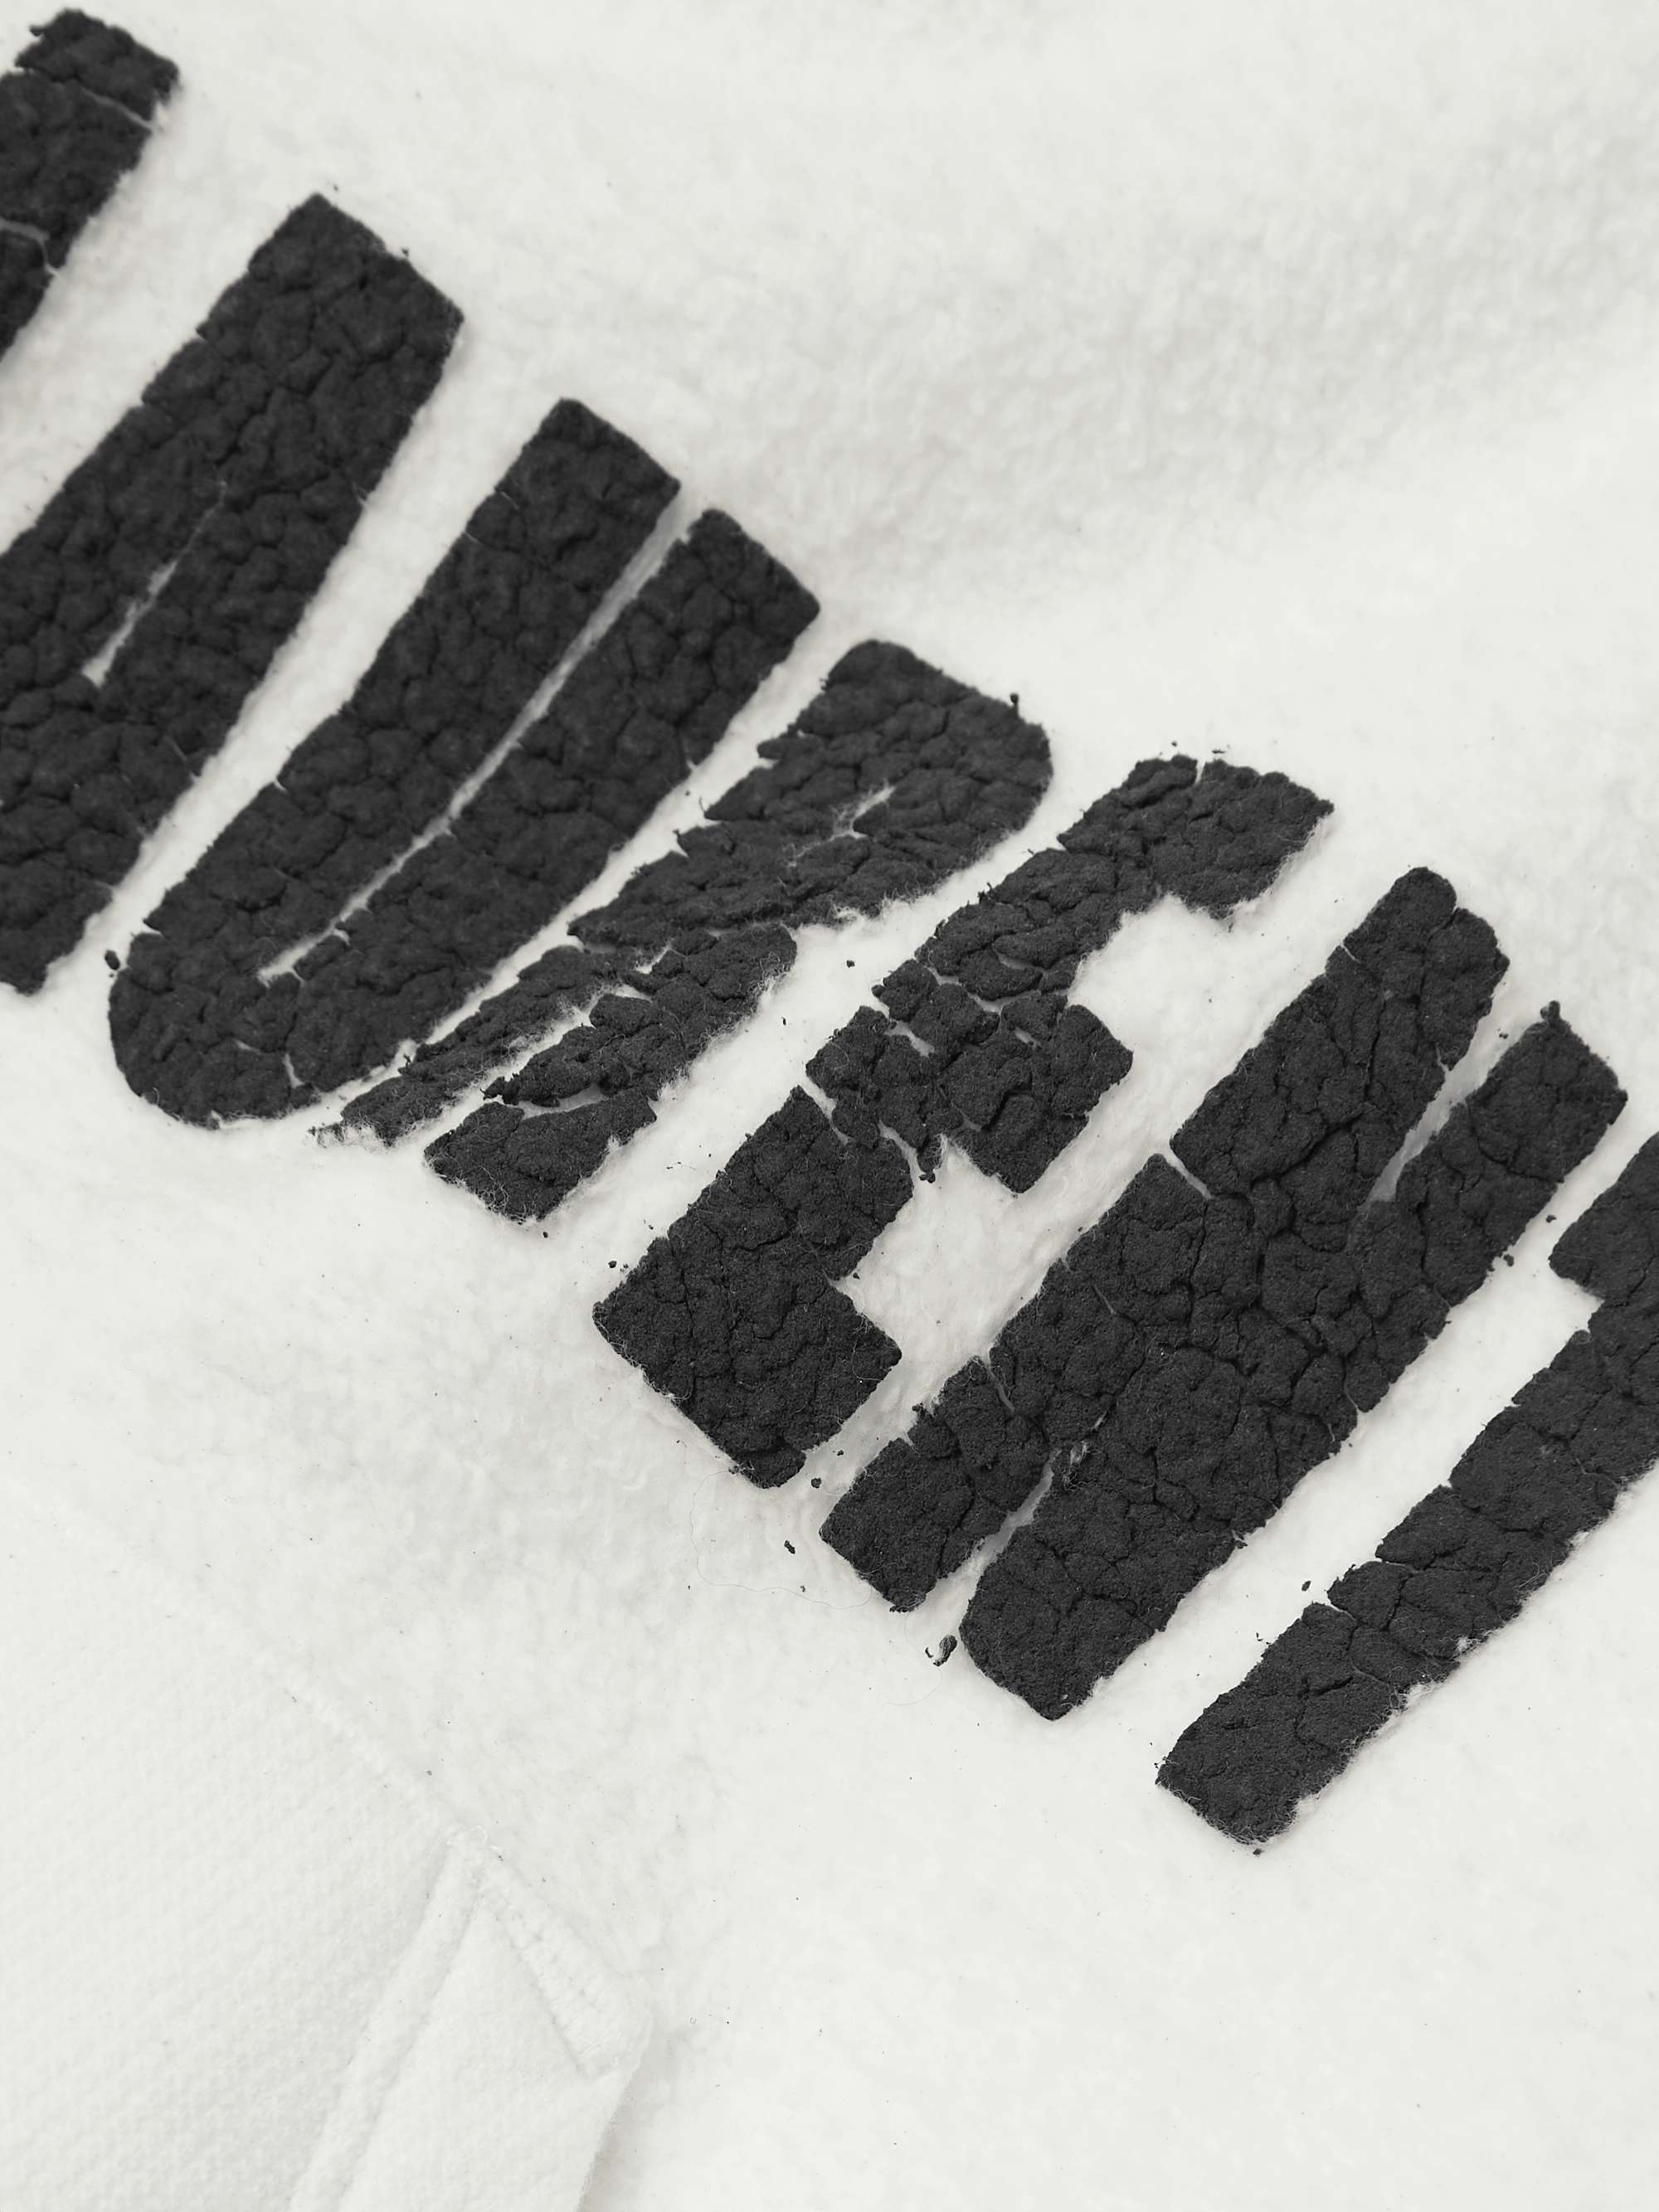 SAINT LAURENT Agafay Logo-Print Cotton-Fleece Hoodie